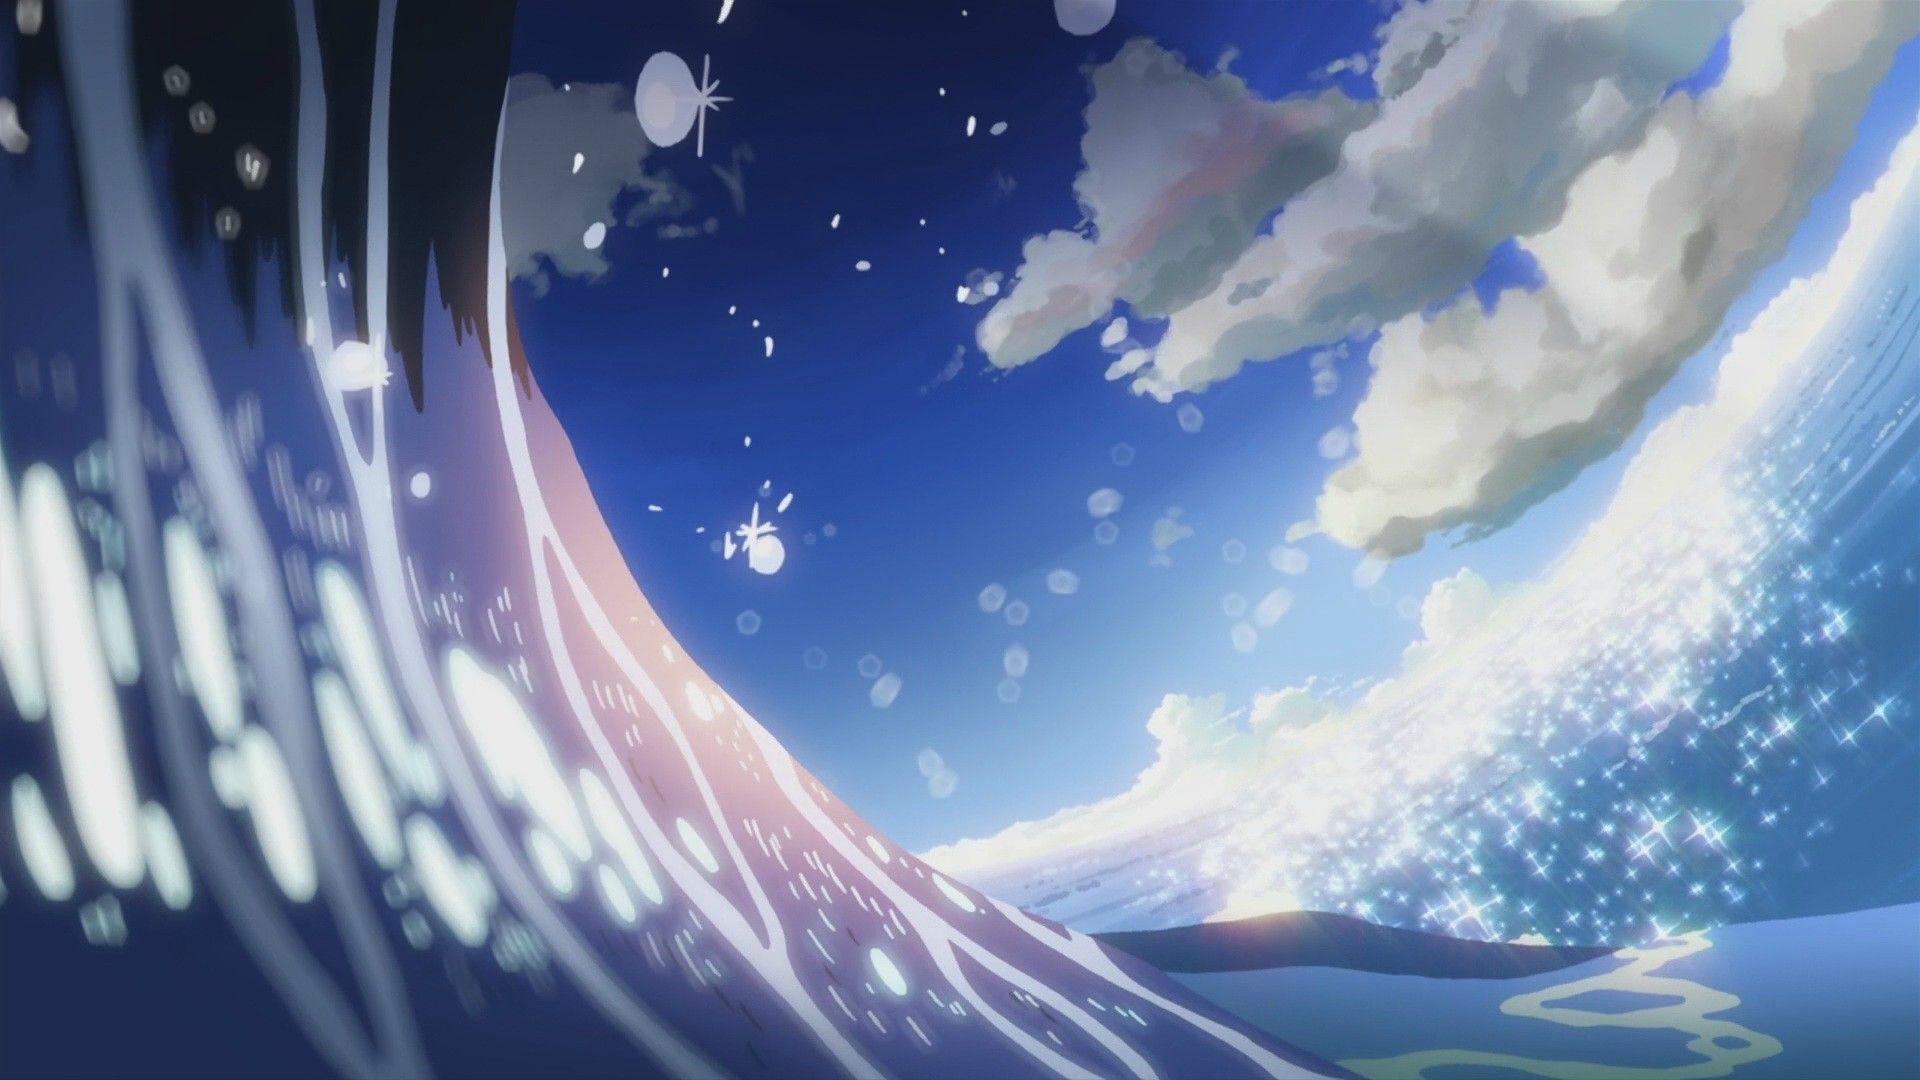 Lo Fi Anime Landscape Wallpapers Top Free Lo Fi Anime Landscape